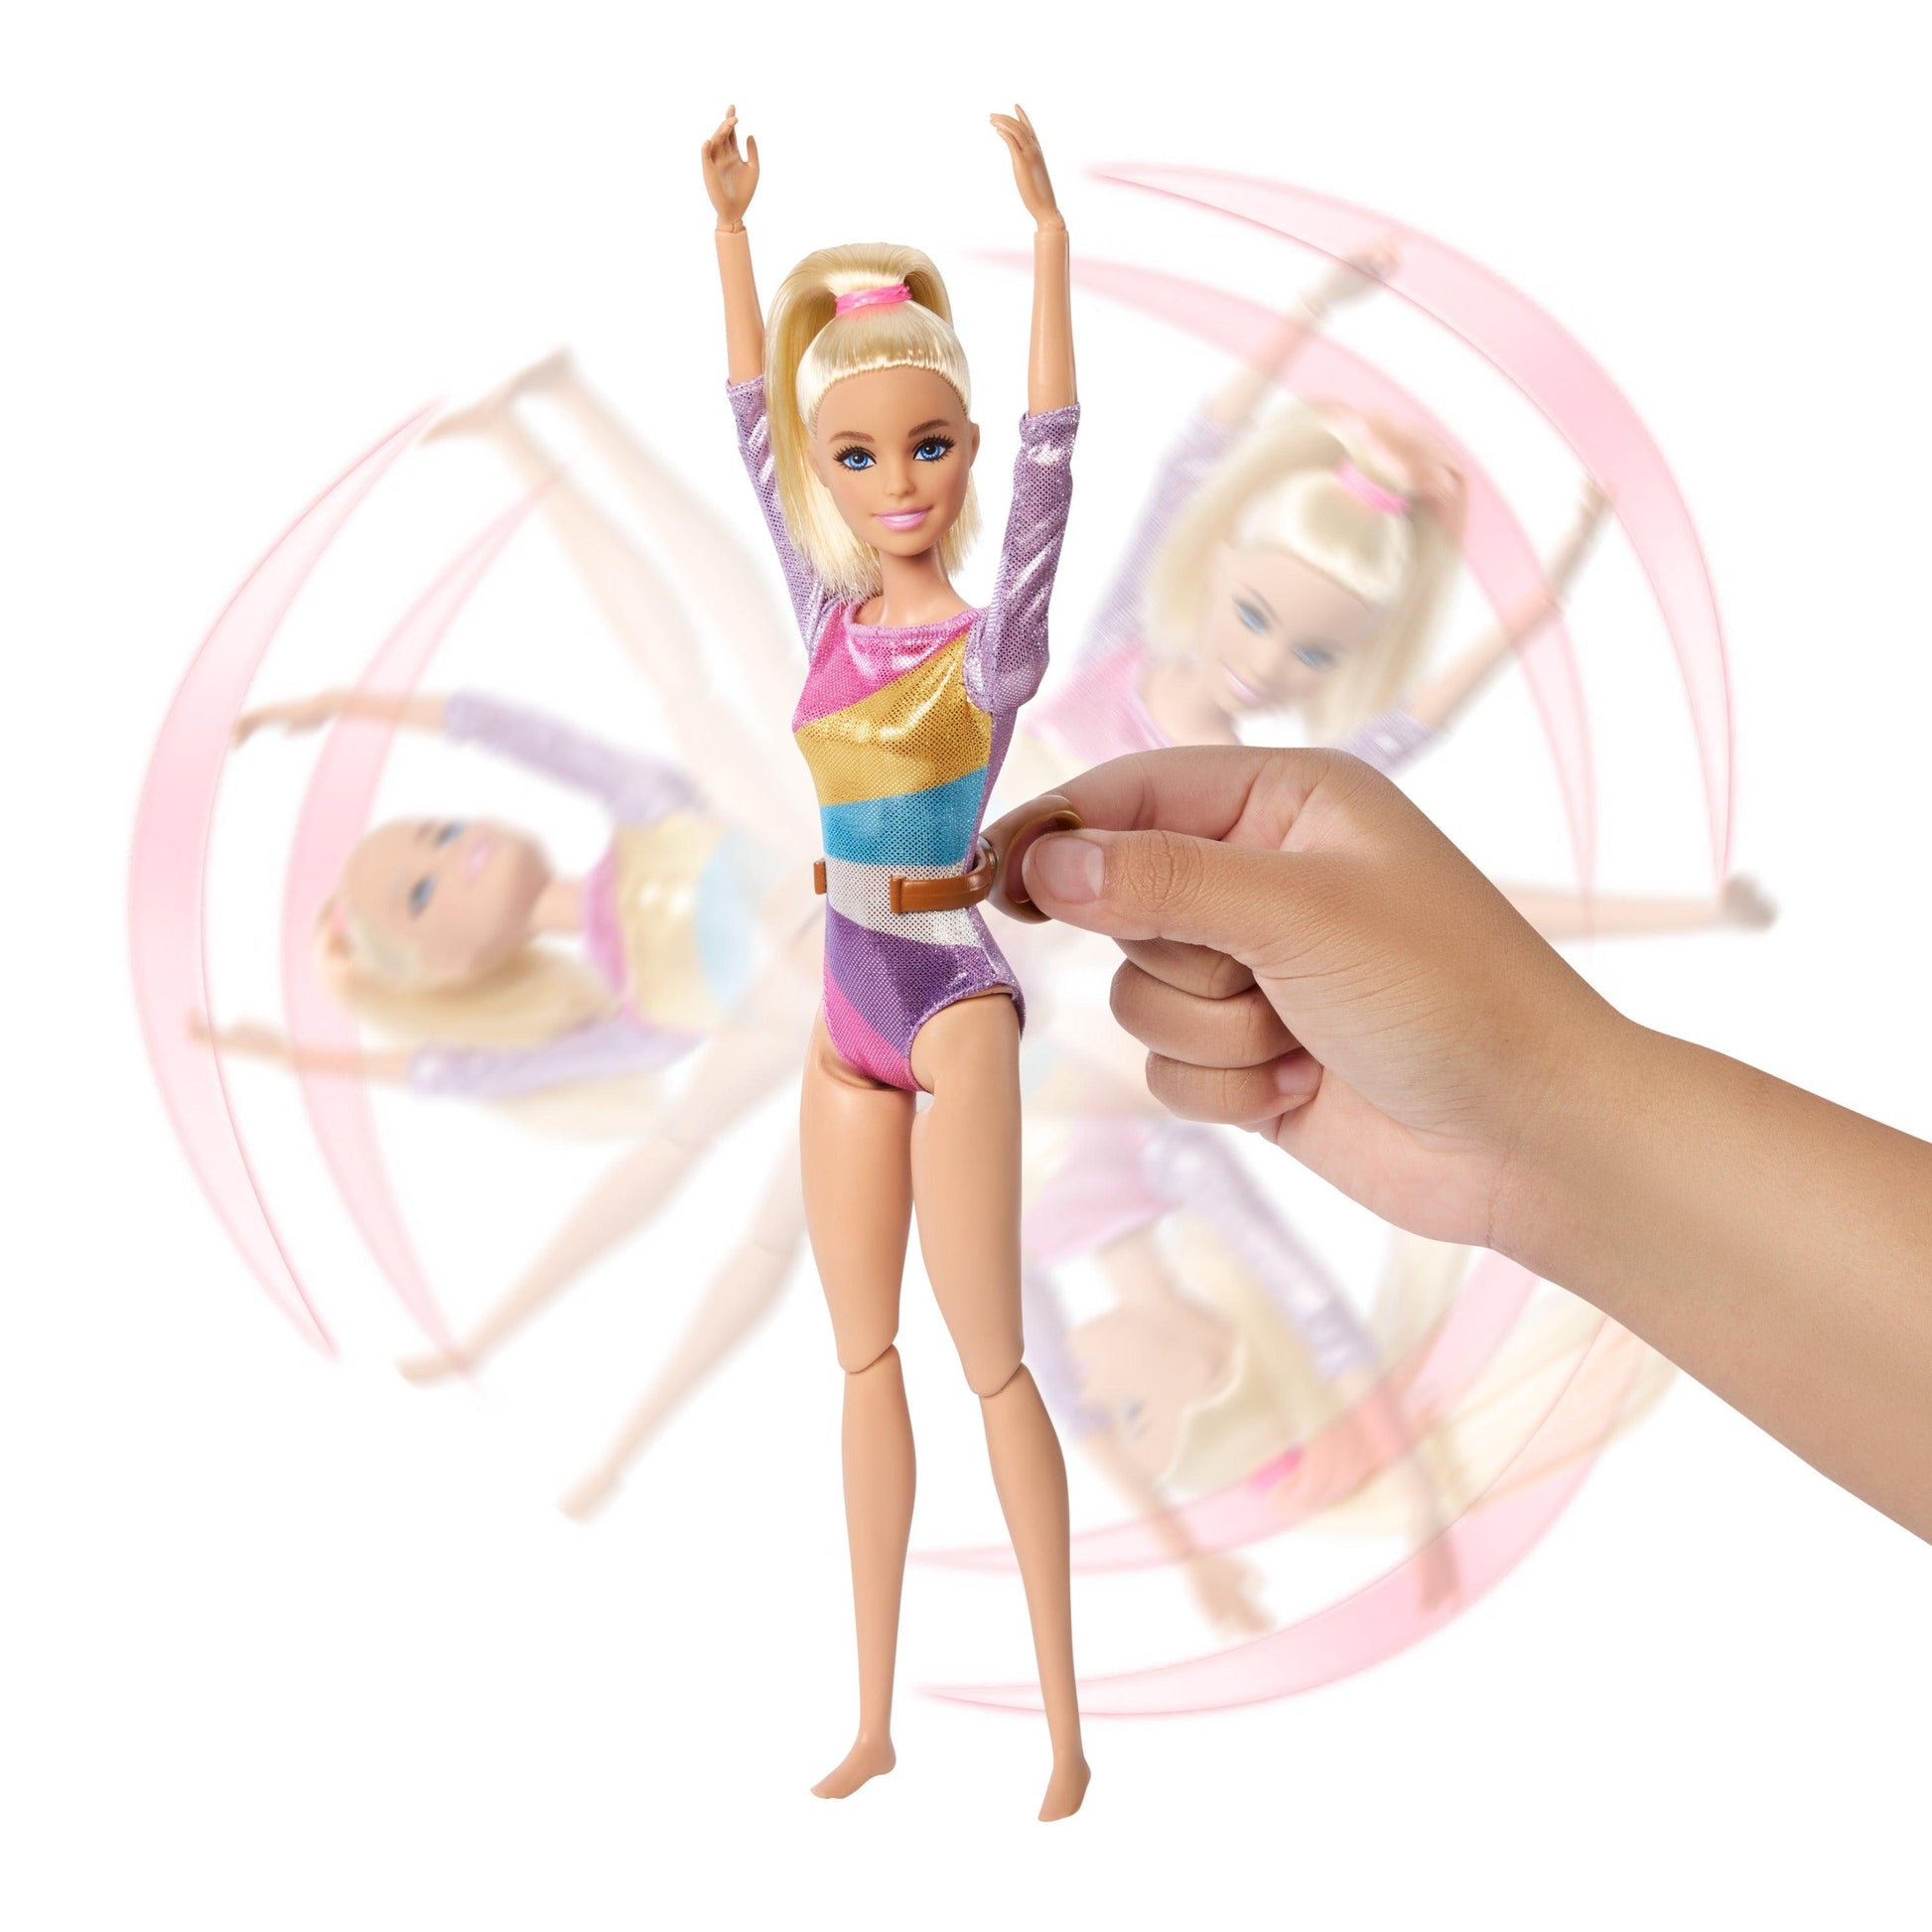 Barbie Gymnastics playset